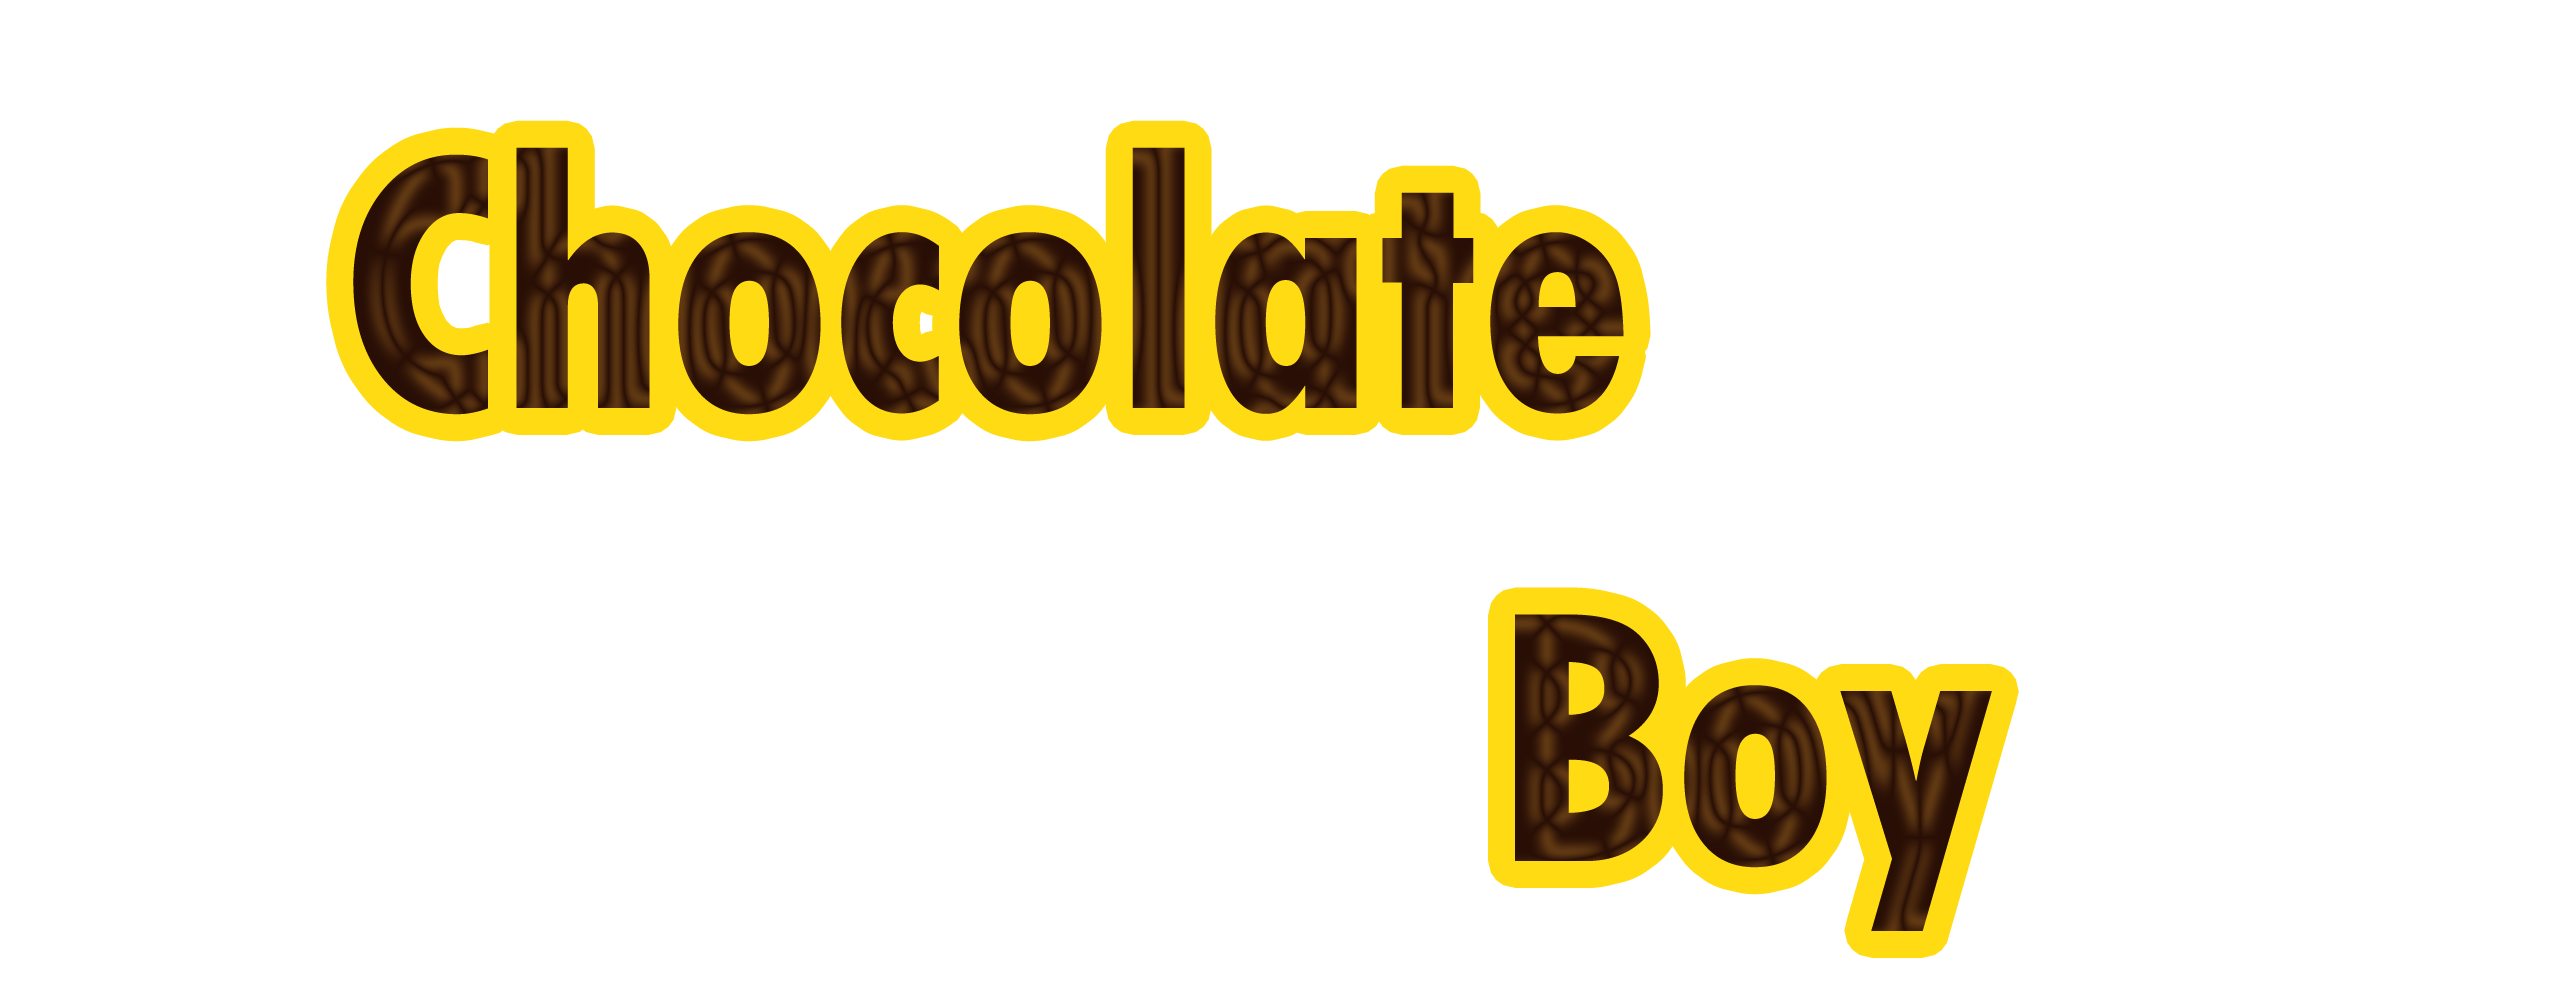 Chocolate Boy #14